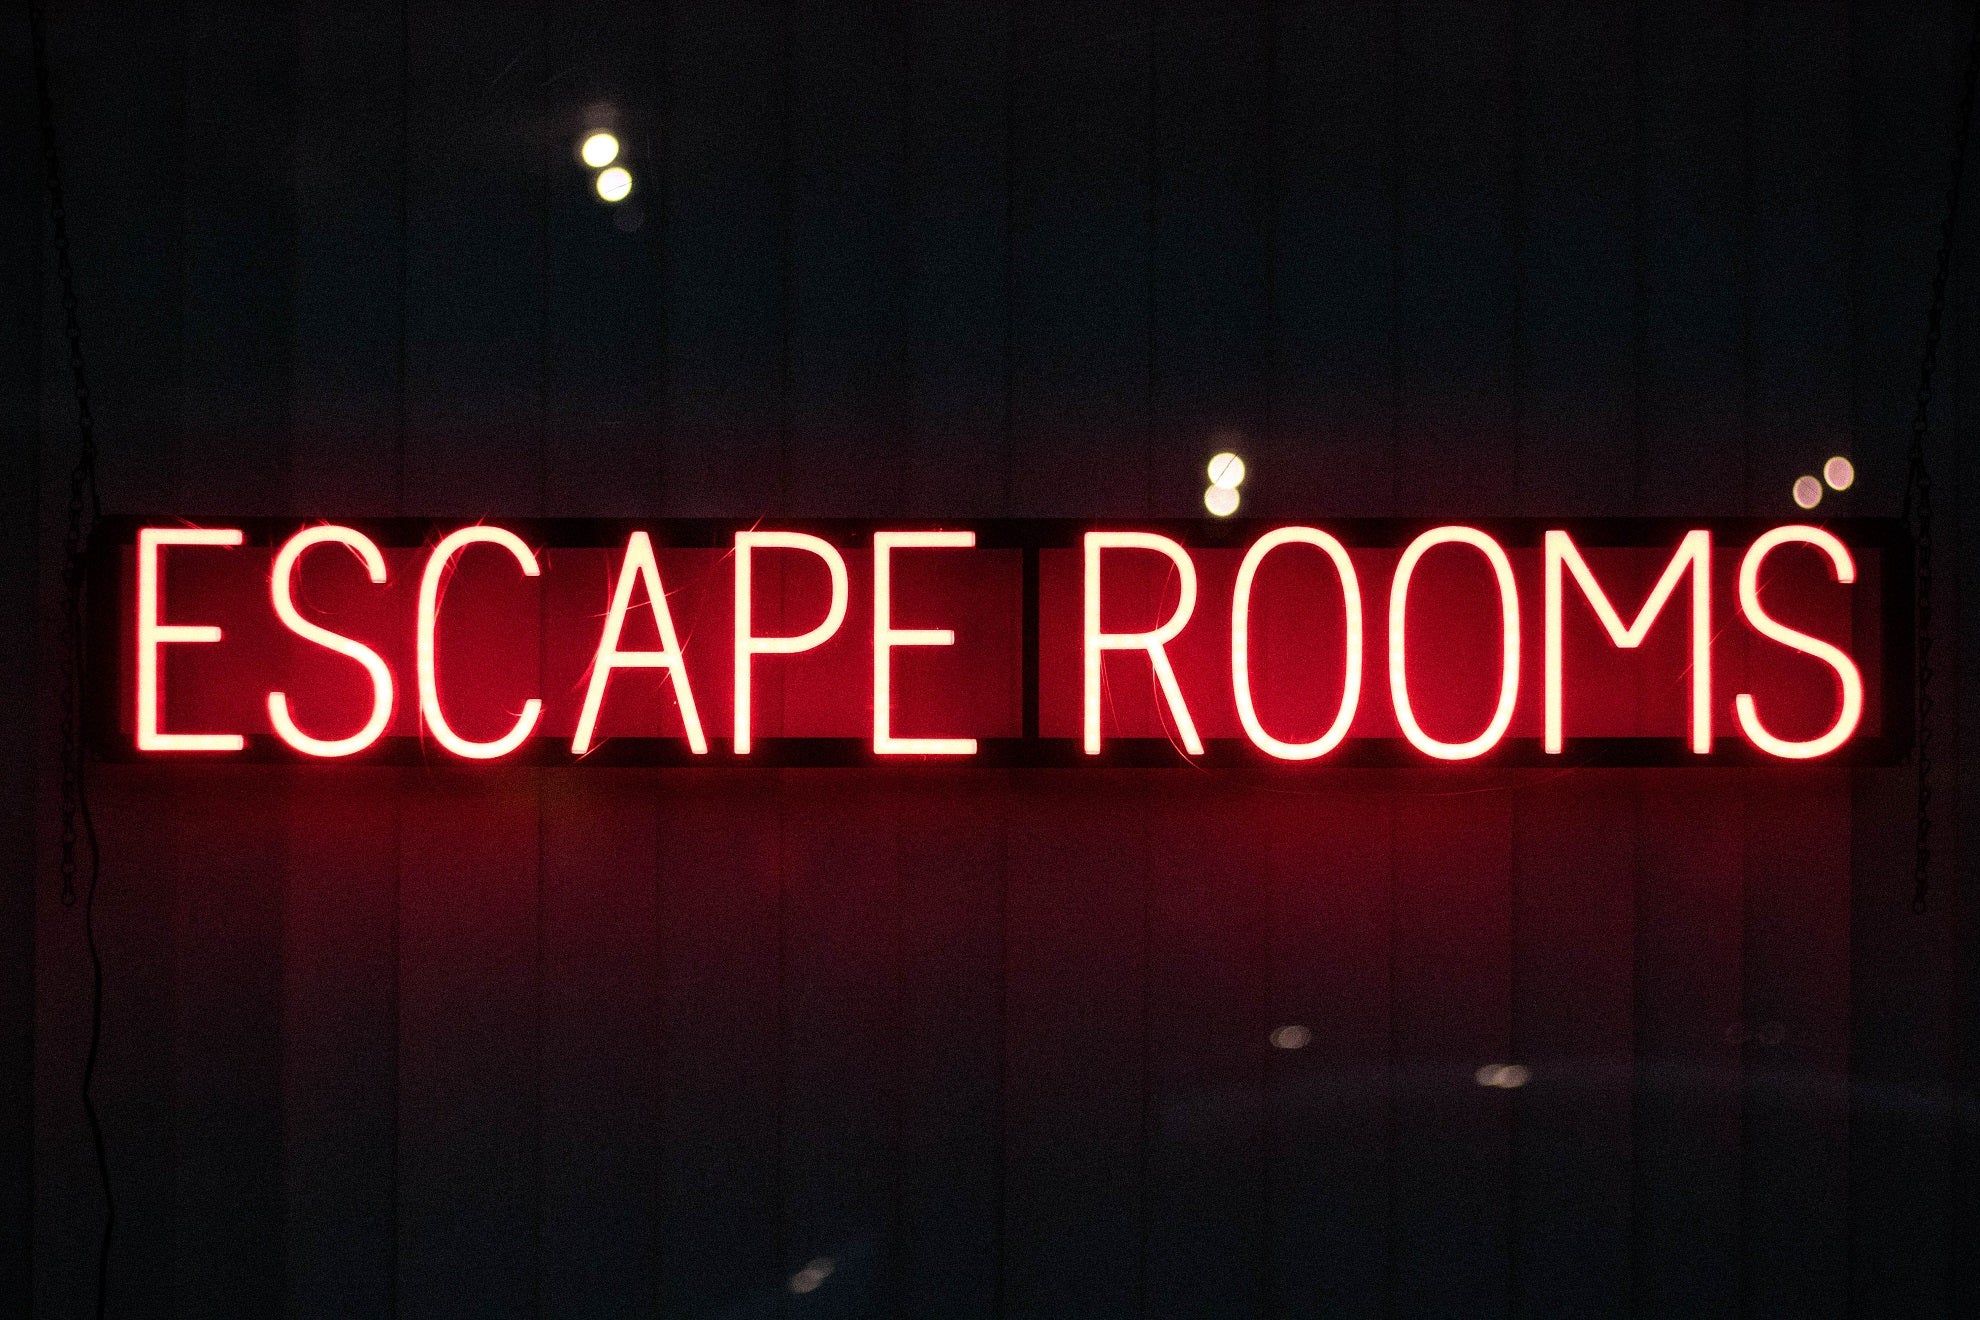 London's Escape Room Adventures